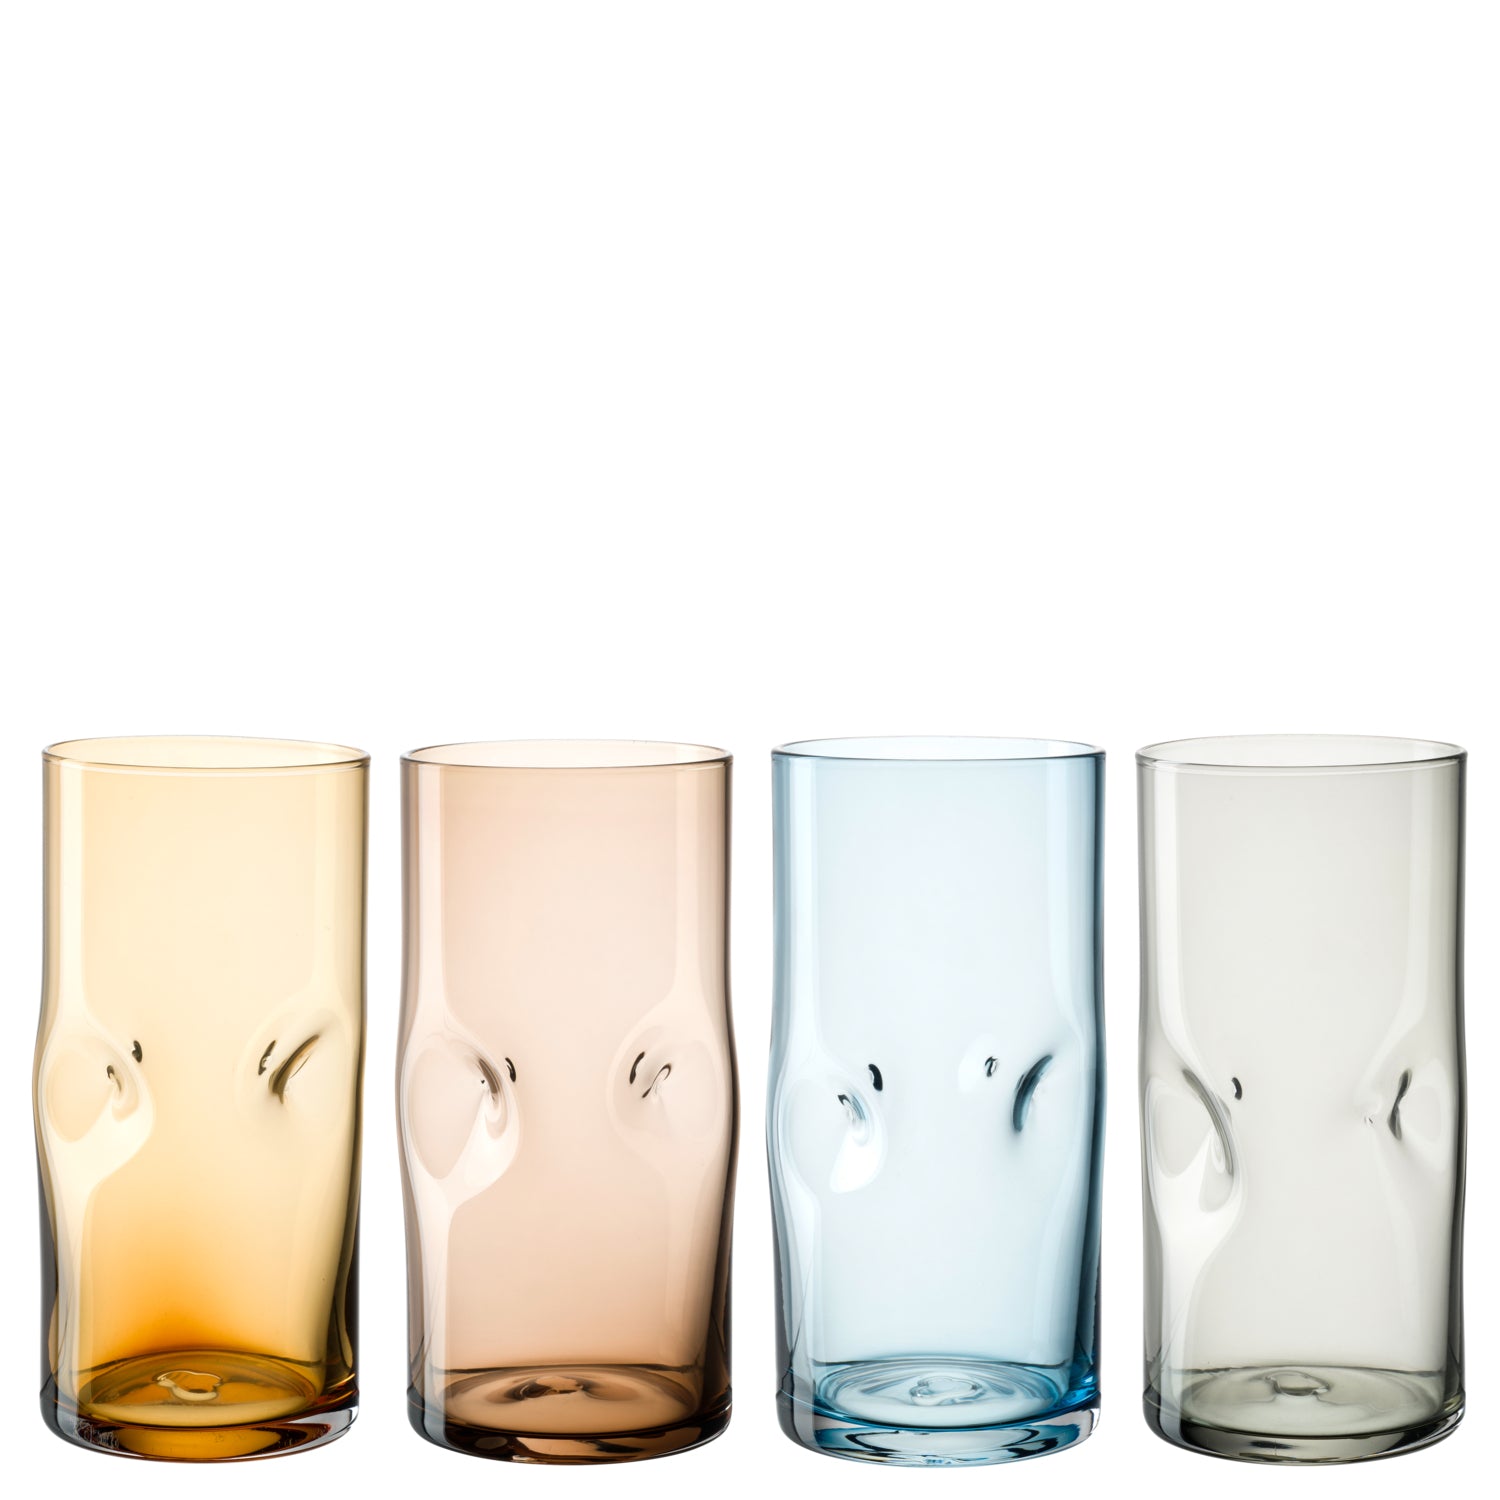 Trinkglas VESUVIO 330 ml 4er-Set farbig sortiert